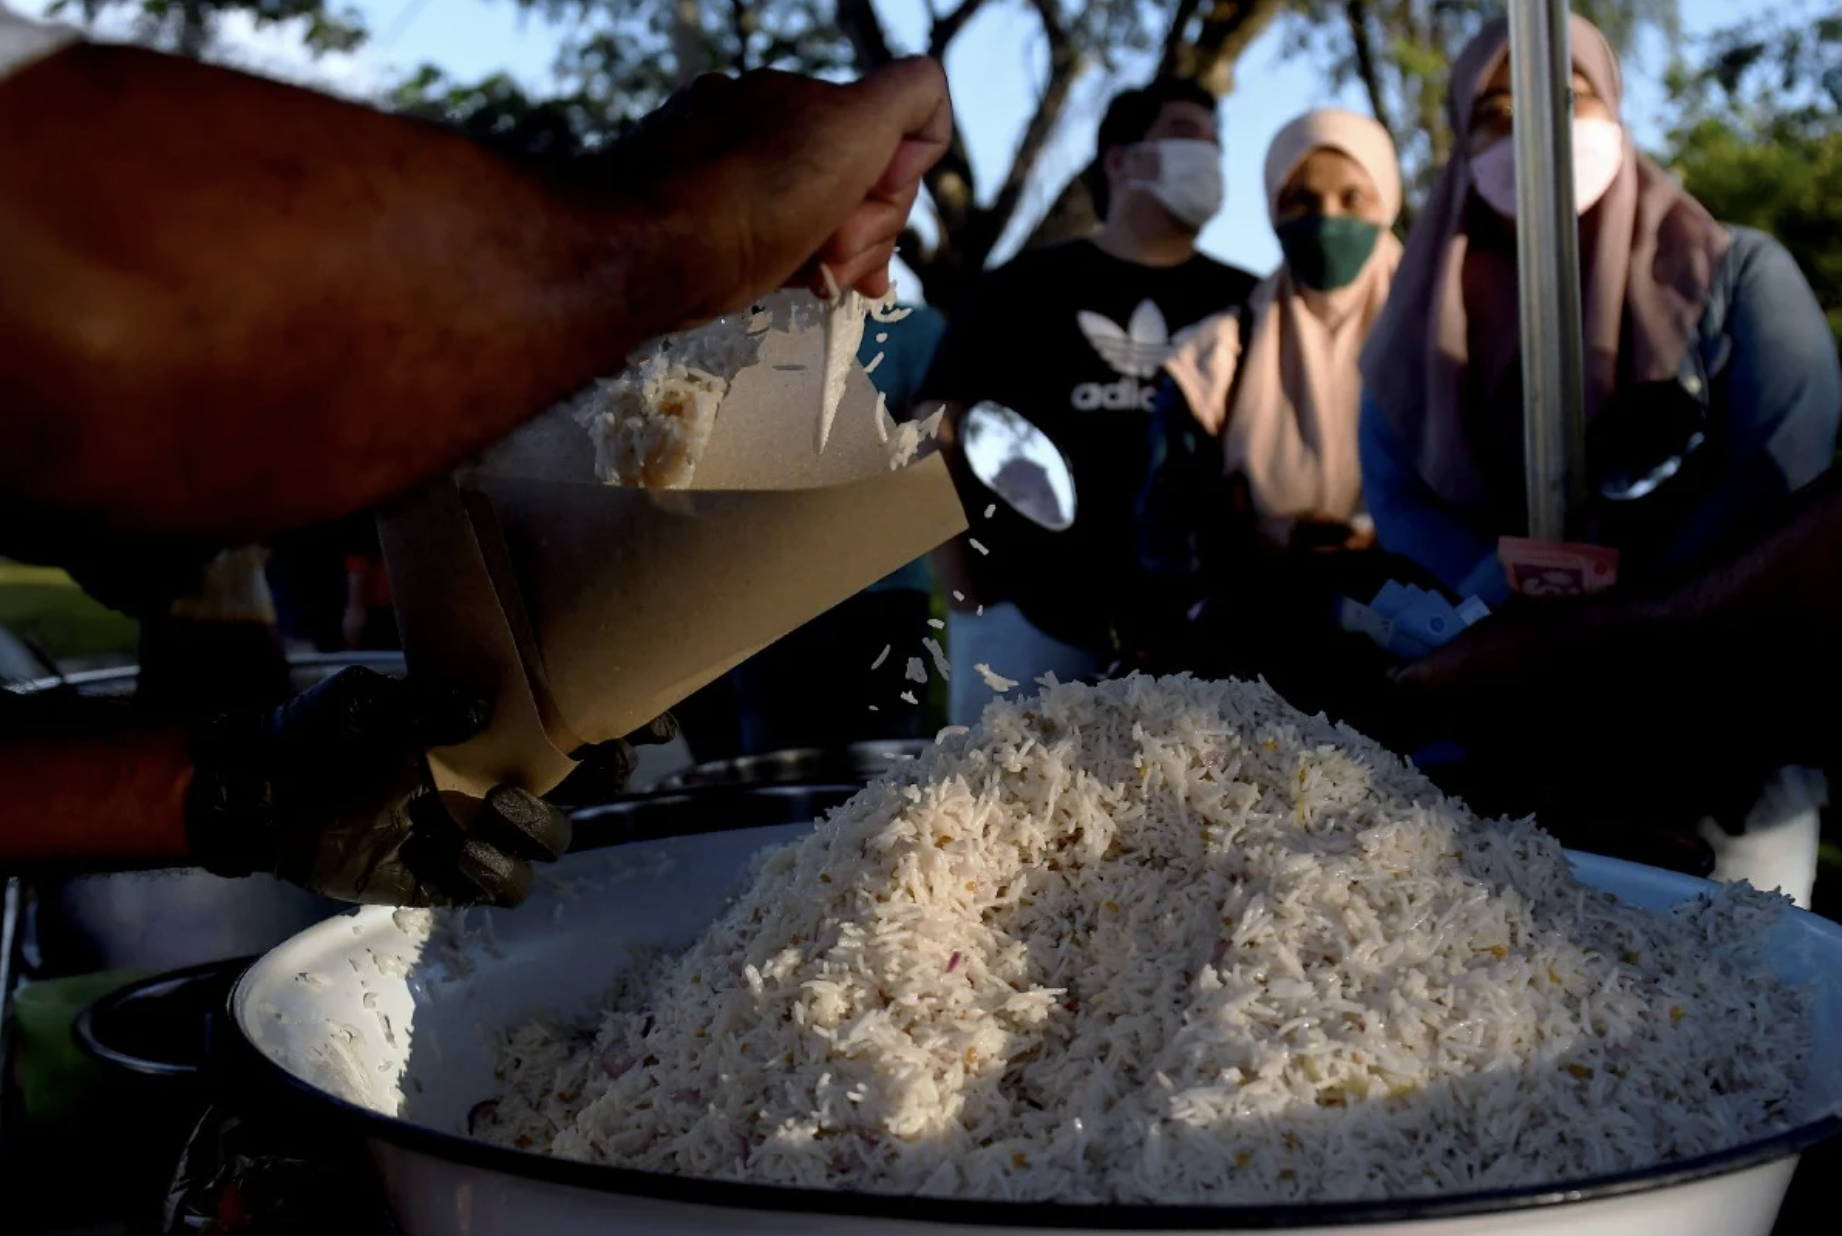 Nasi dagang vendor surprised by hordes of customers flocking in following viral documentary clip | weirdkaya